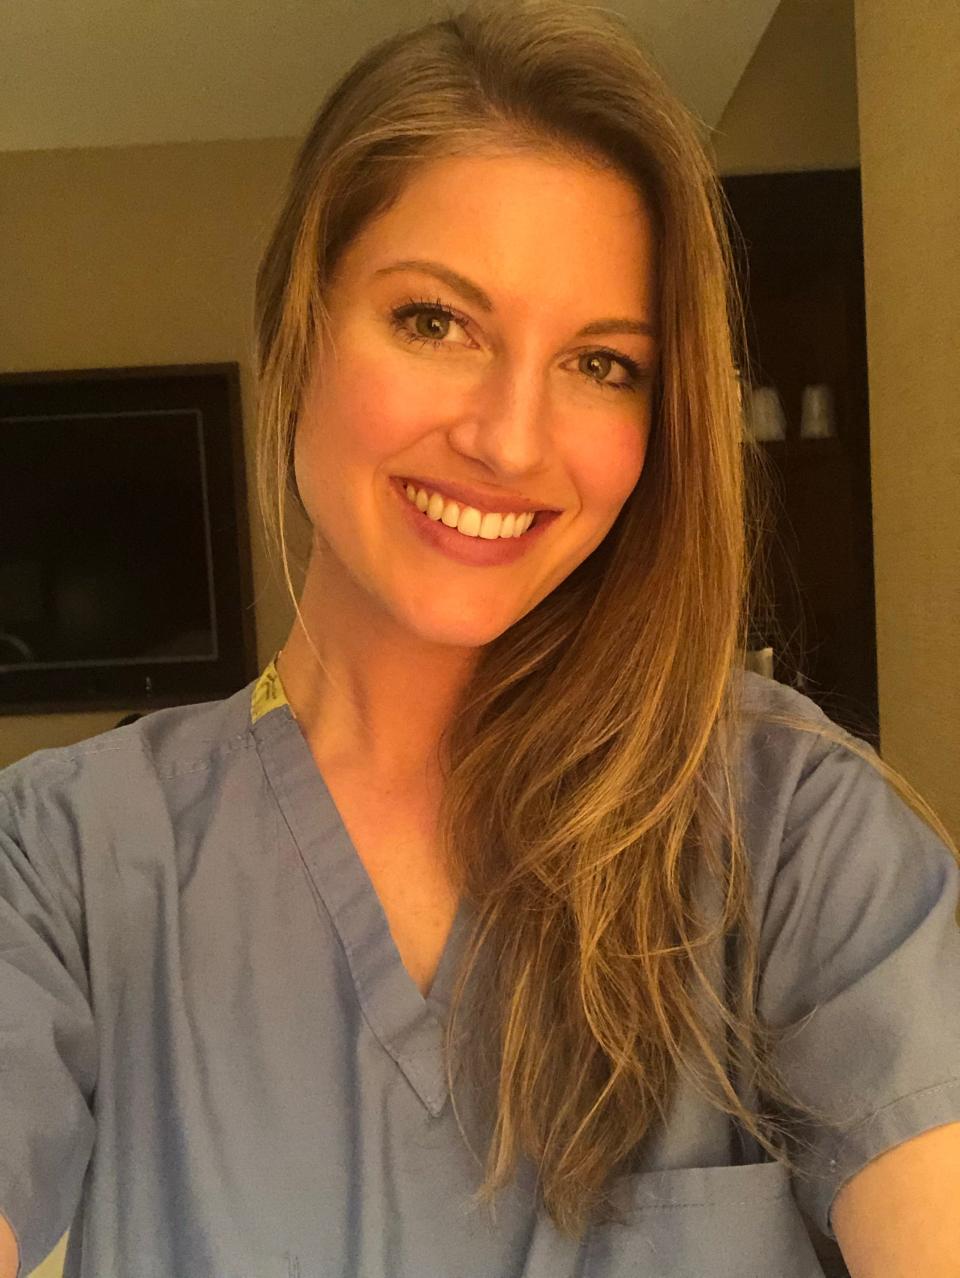 Janelle Engström Orbon, a critical care nurse, has been an acute care nurse for 8 years. She recently returned to New York Presbyterian Hospital.